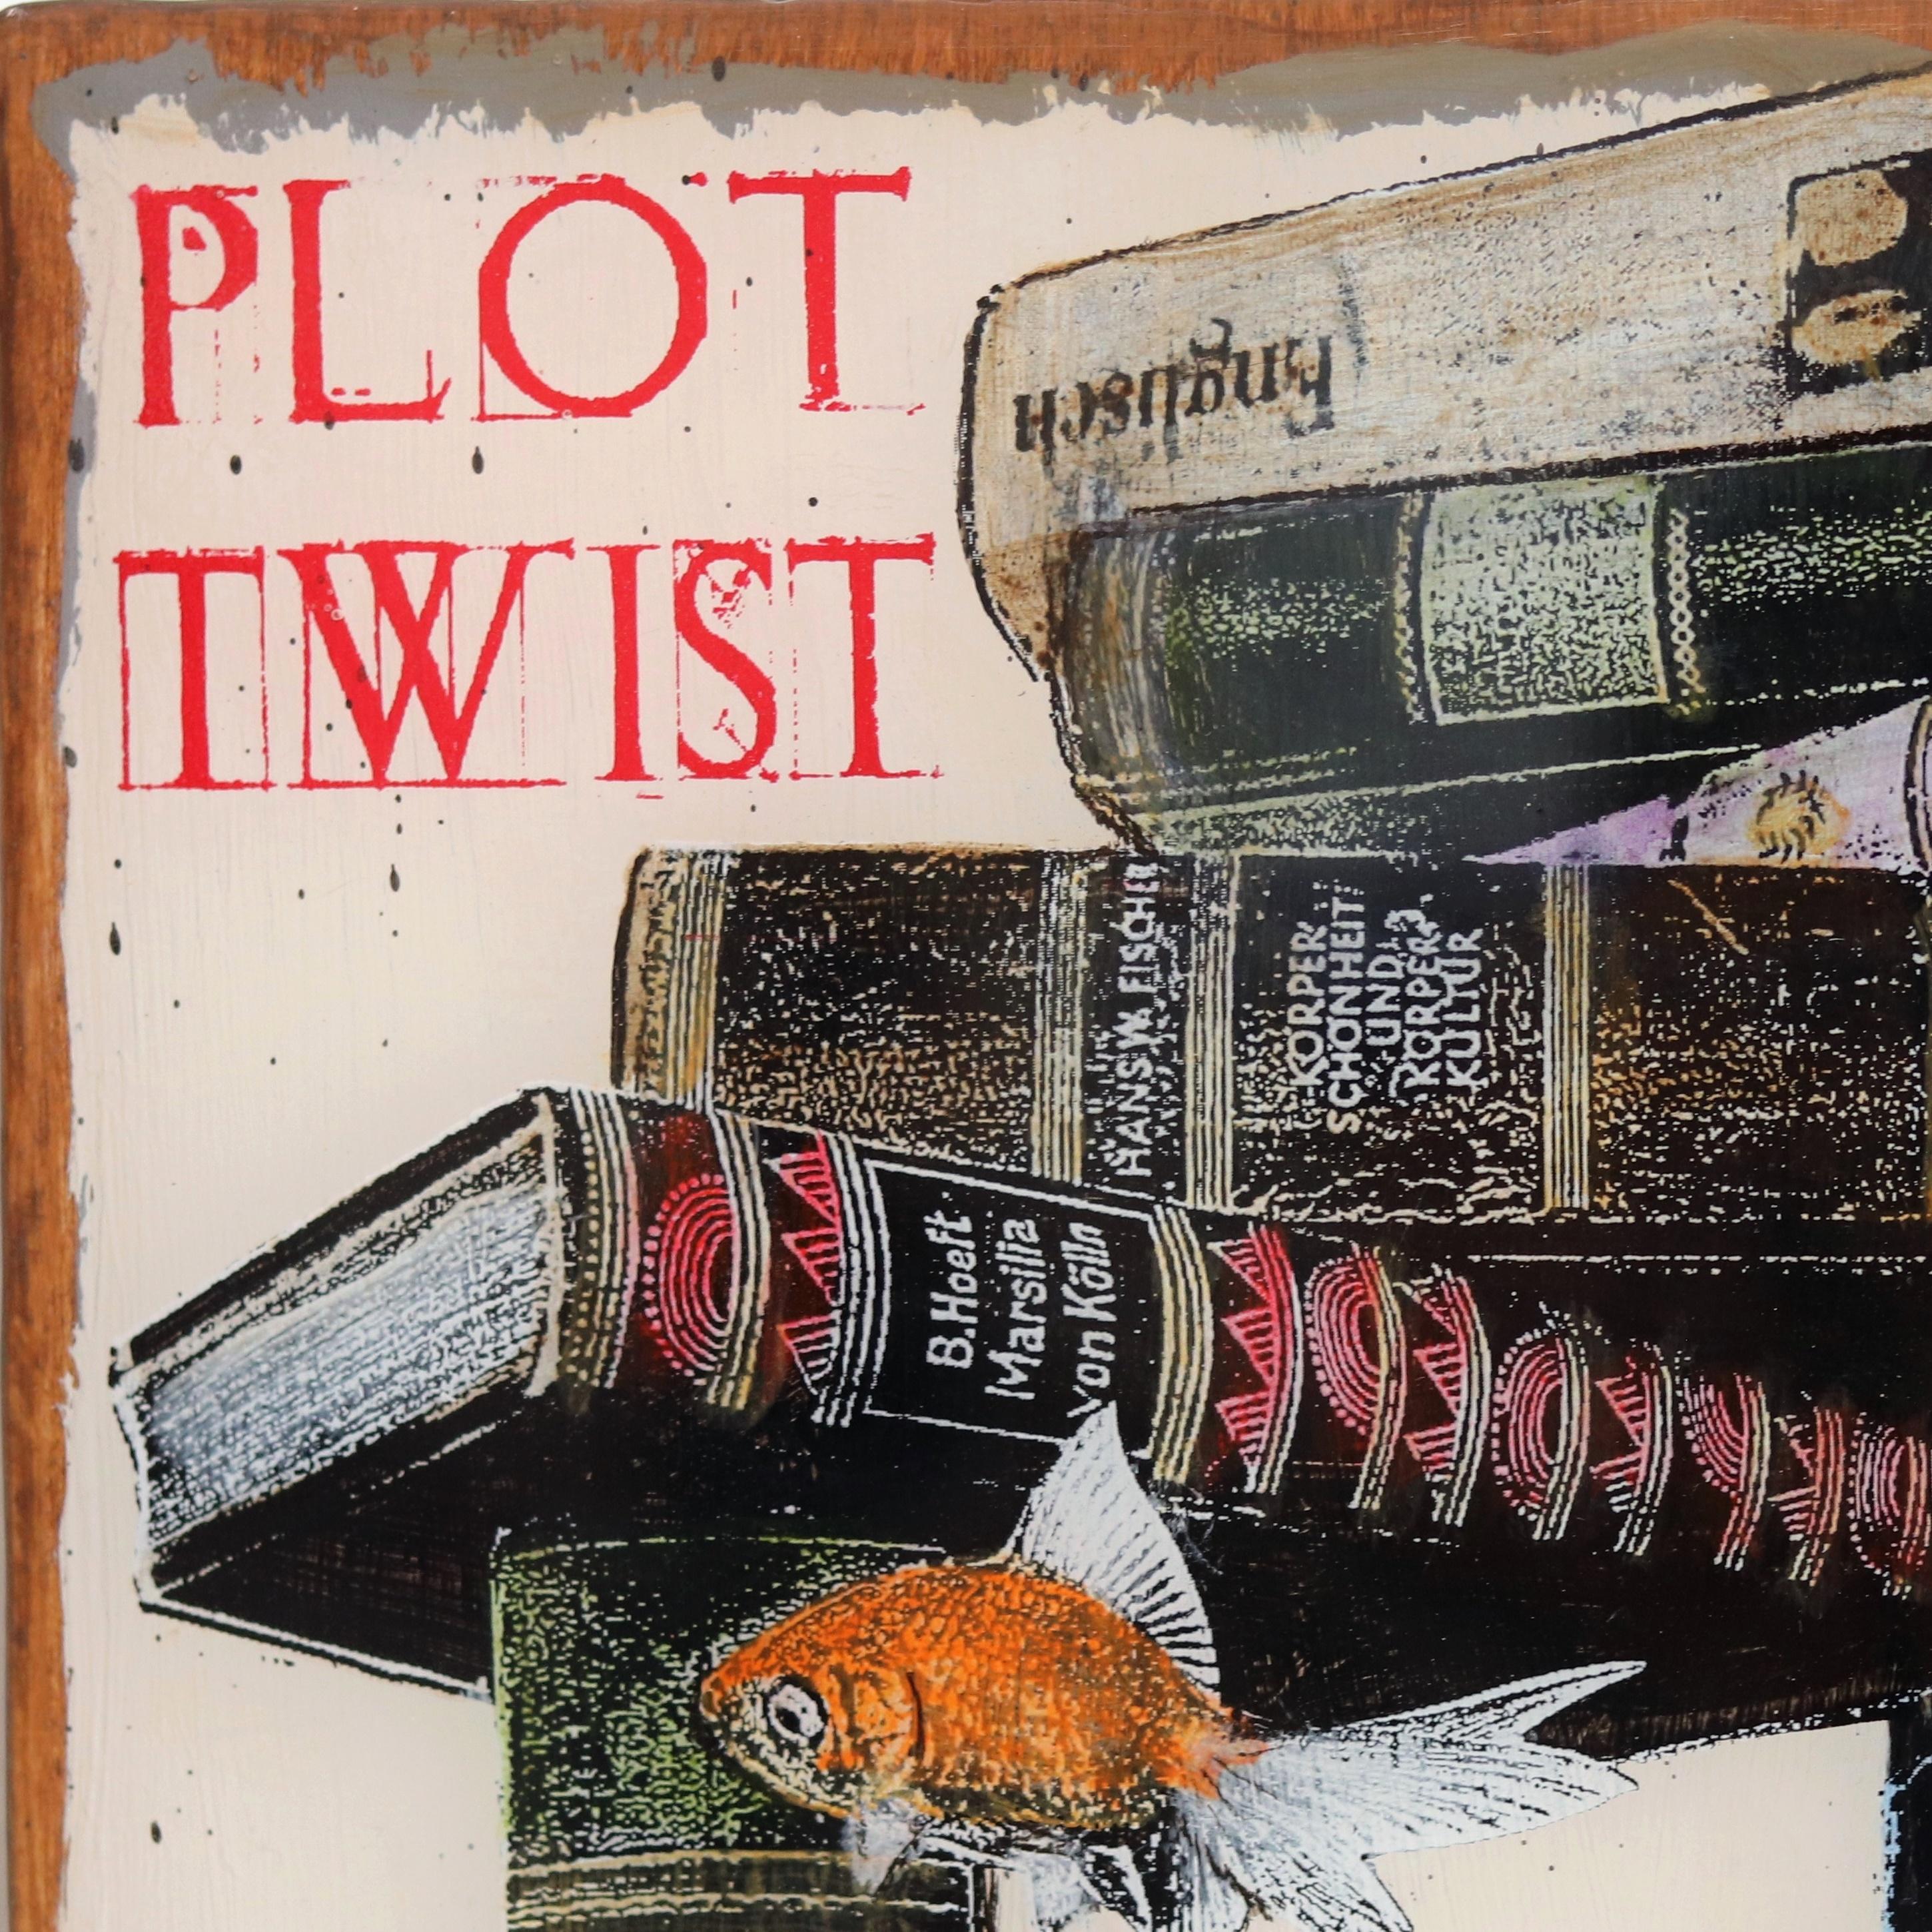 Plot Twist - Pop Art Mixed Media Art by Carl Smith